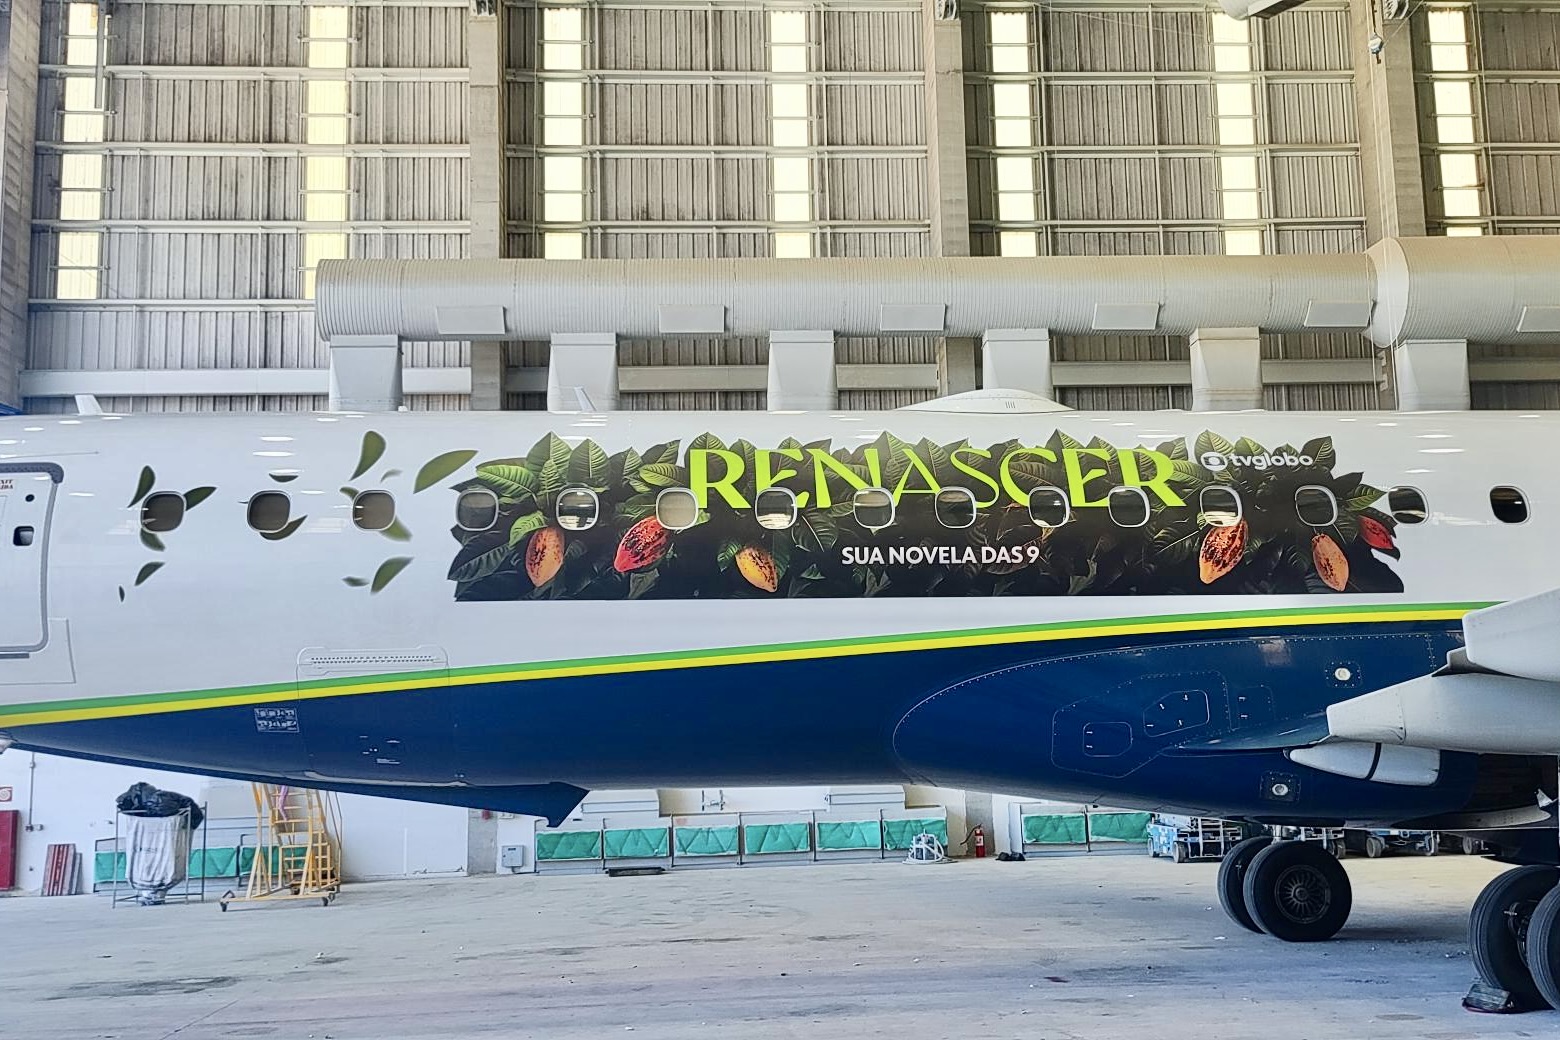 Azul adesiva aeronave para promover o lançamento da novela “Renascer”